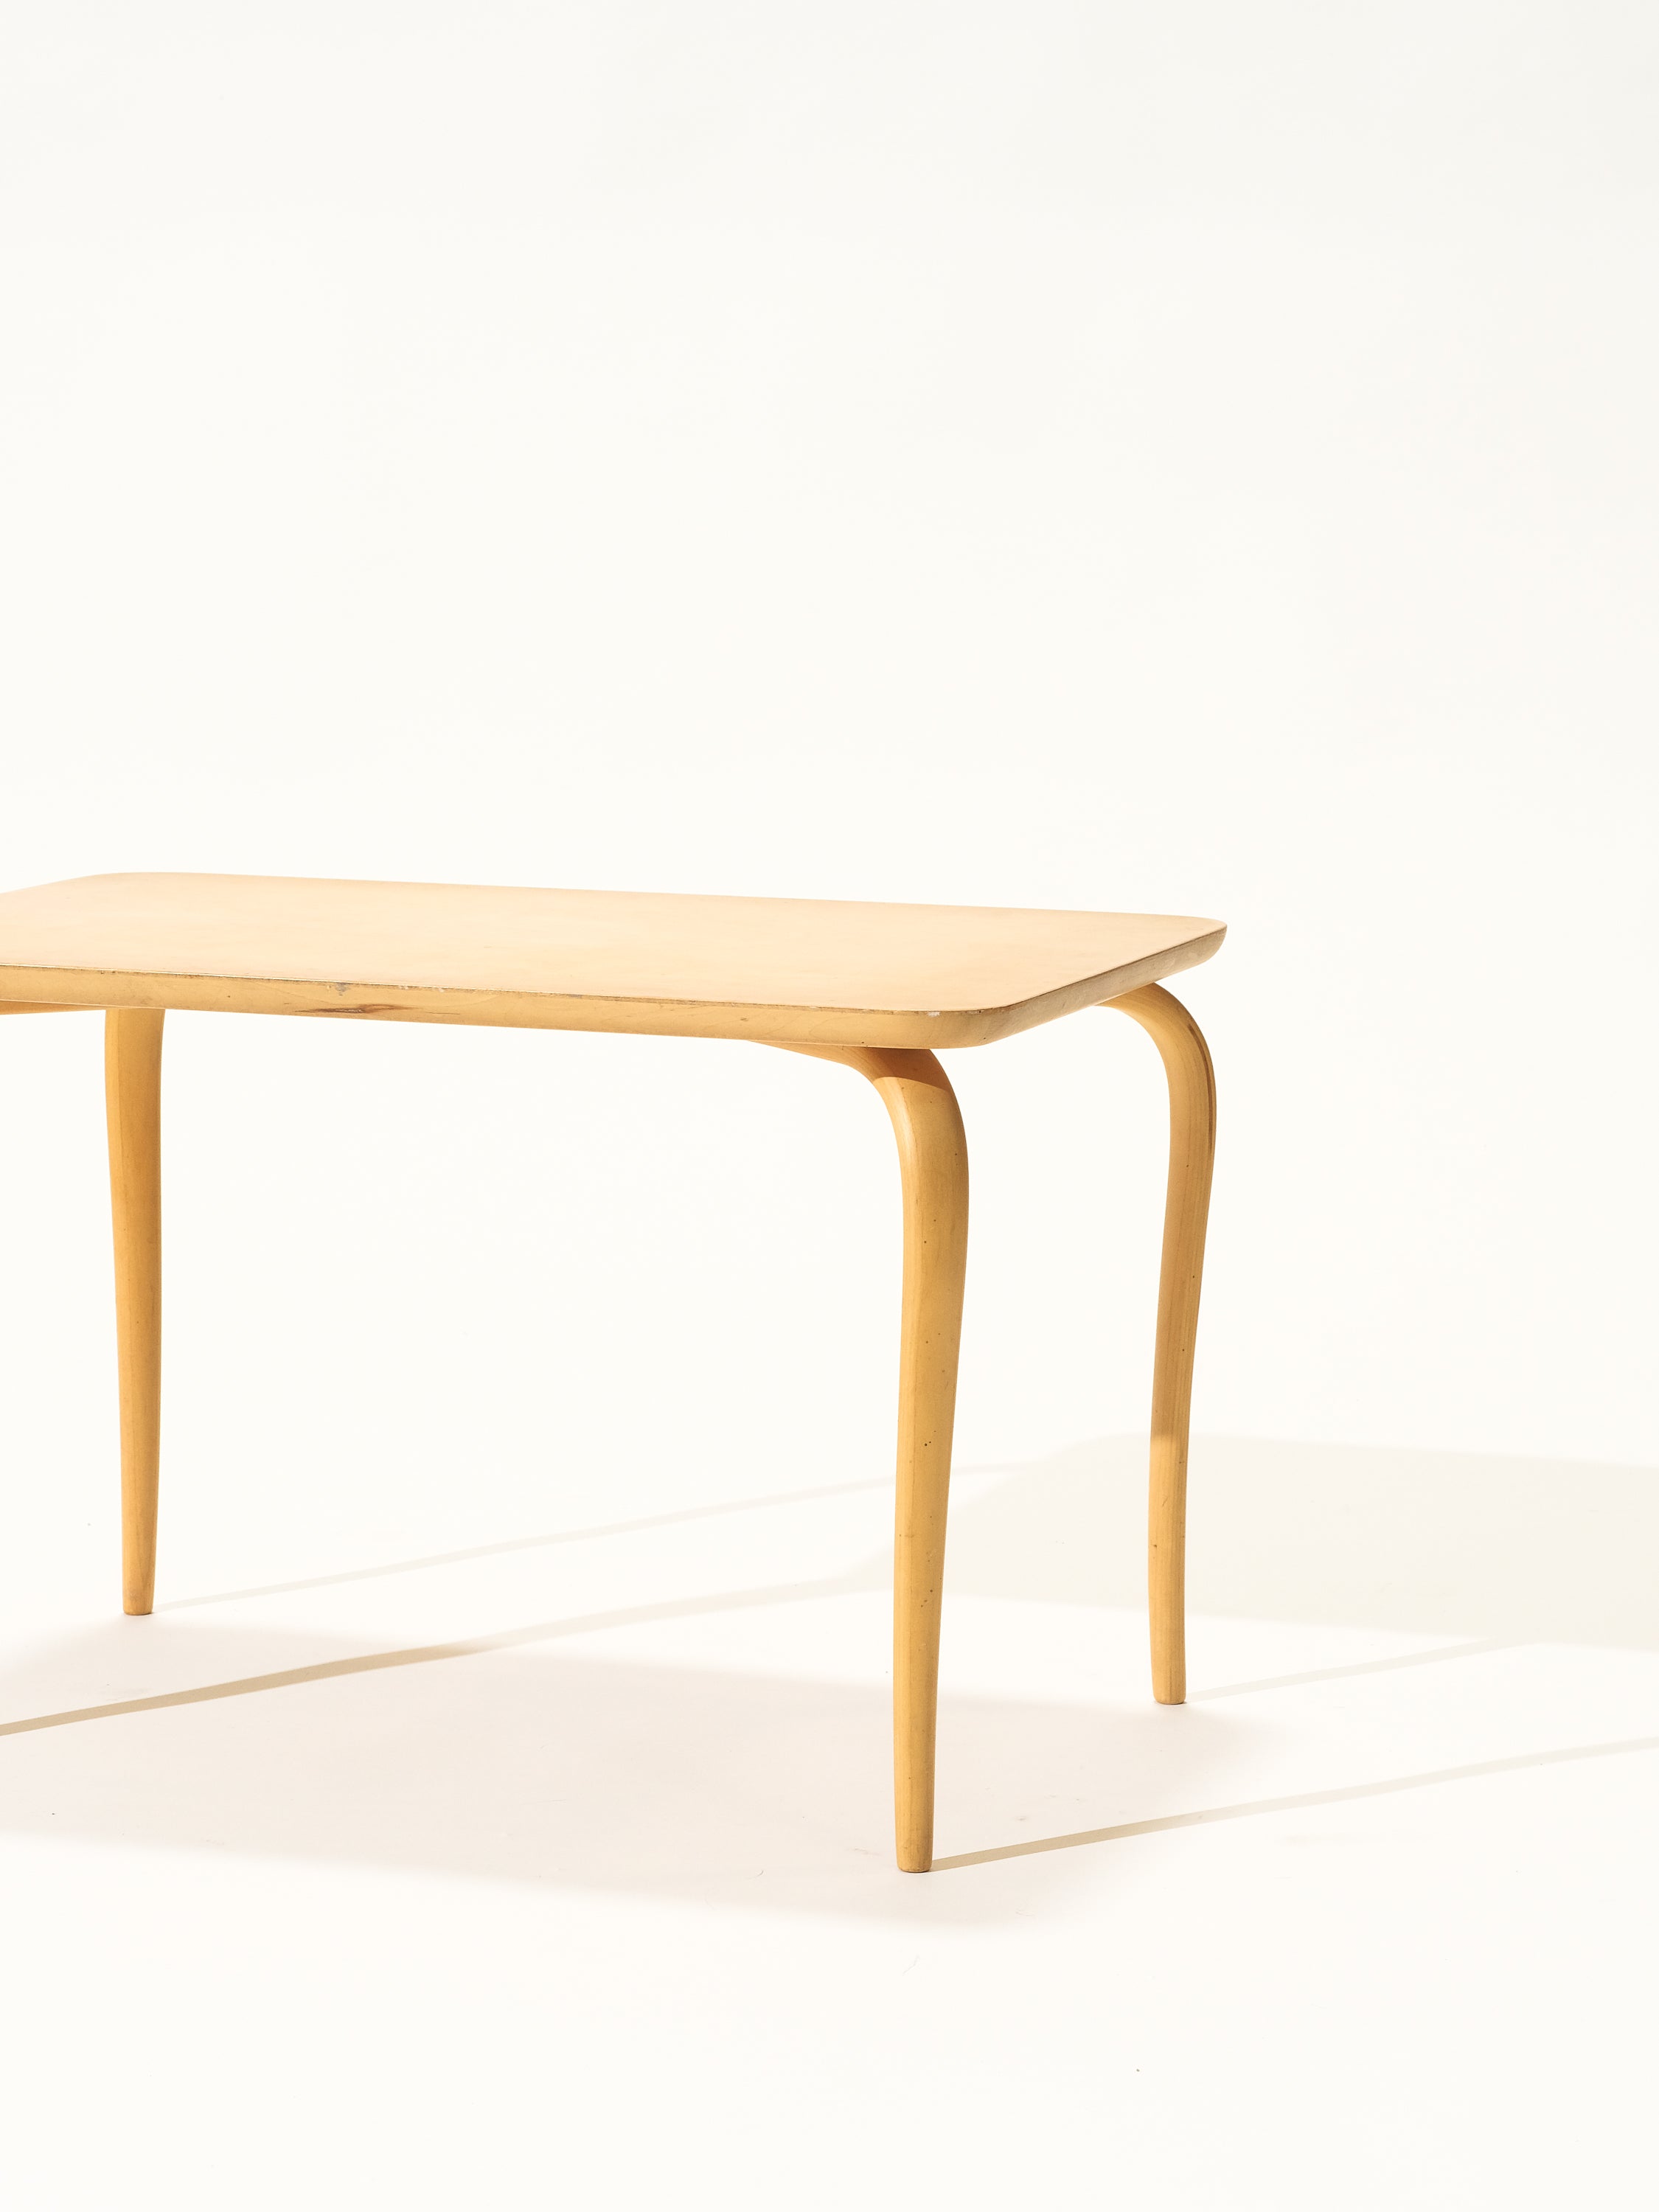 Model “Annika” Birch Side Table by Bruno Mathsson for Karl Mathsson, Sweden, 1960’s